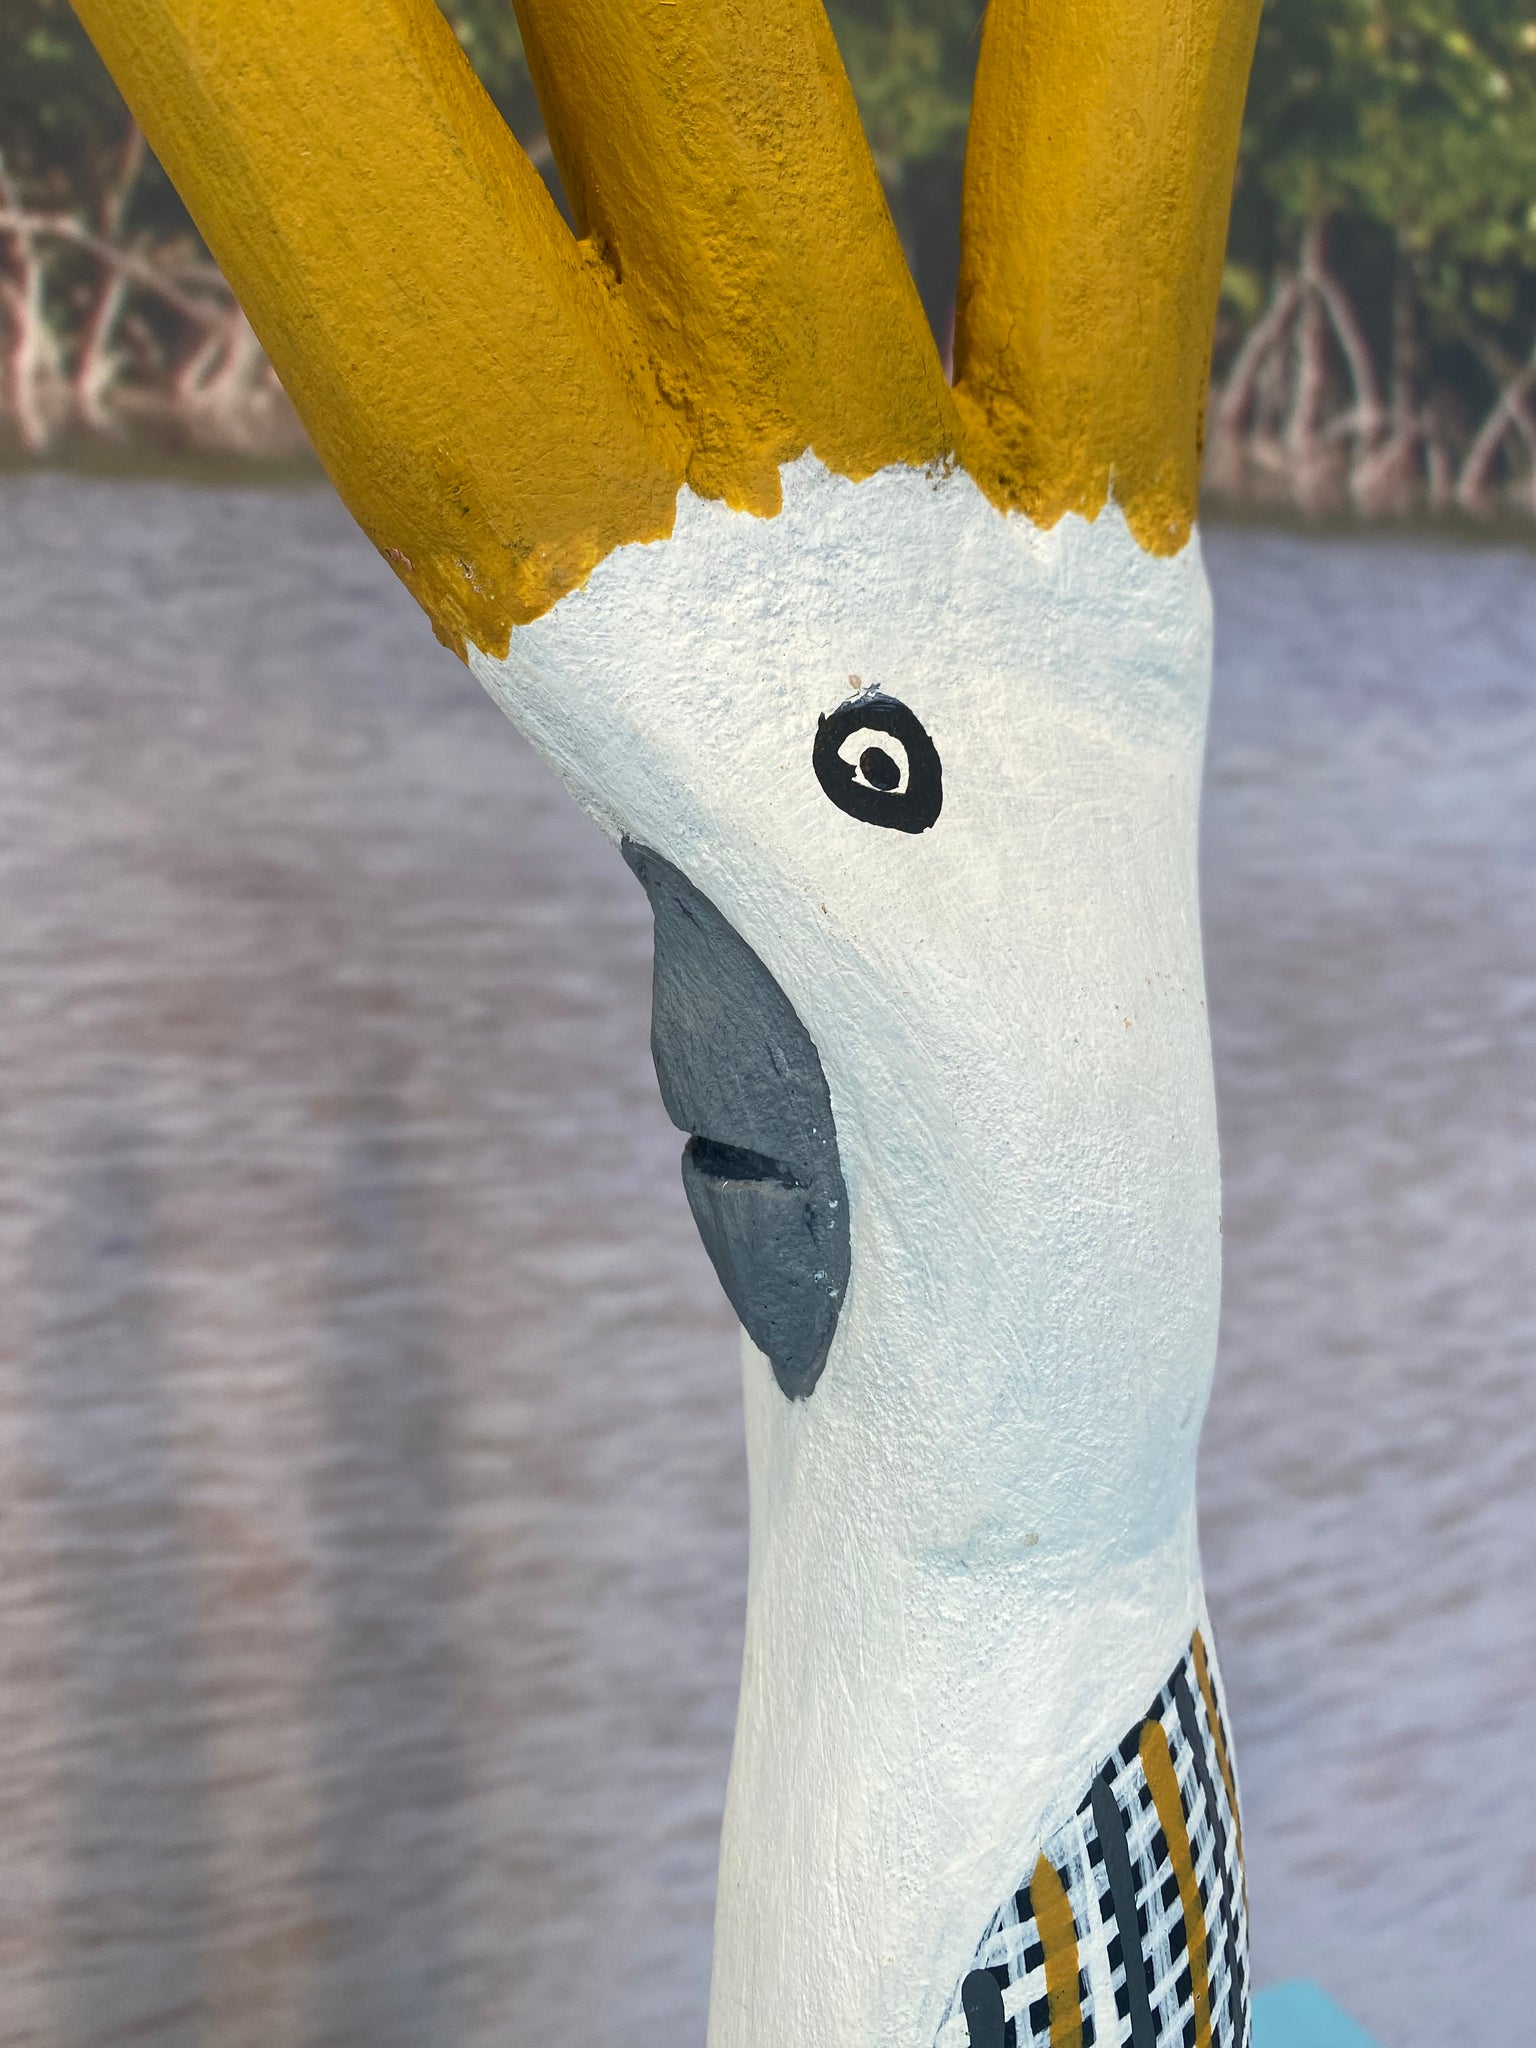 23. Ngarradj (Sulphur Crested Cockatoo)